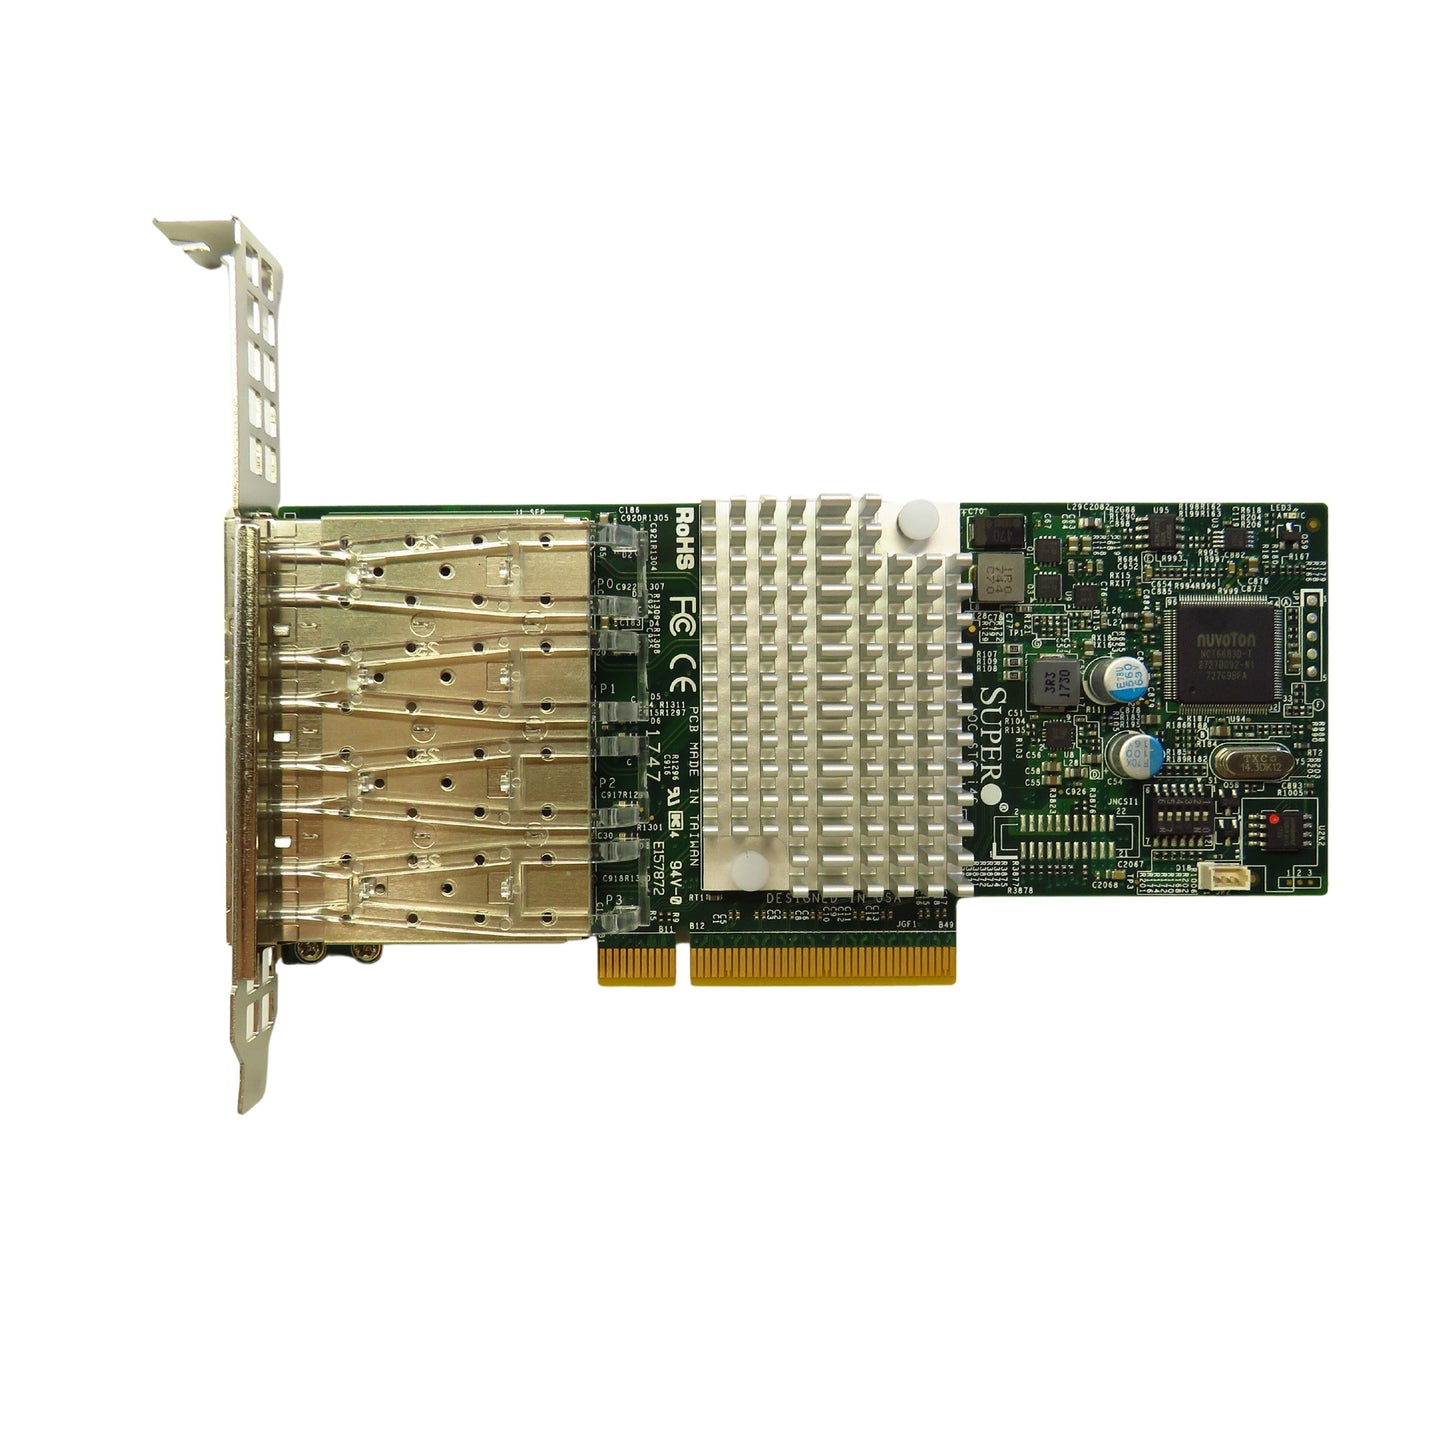 IBM 01EM695 EKFH AOC-STG-i4S XL710 Quad-port 10G/1G Ethernet Converged Adapter (Refurbished)